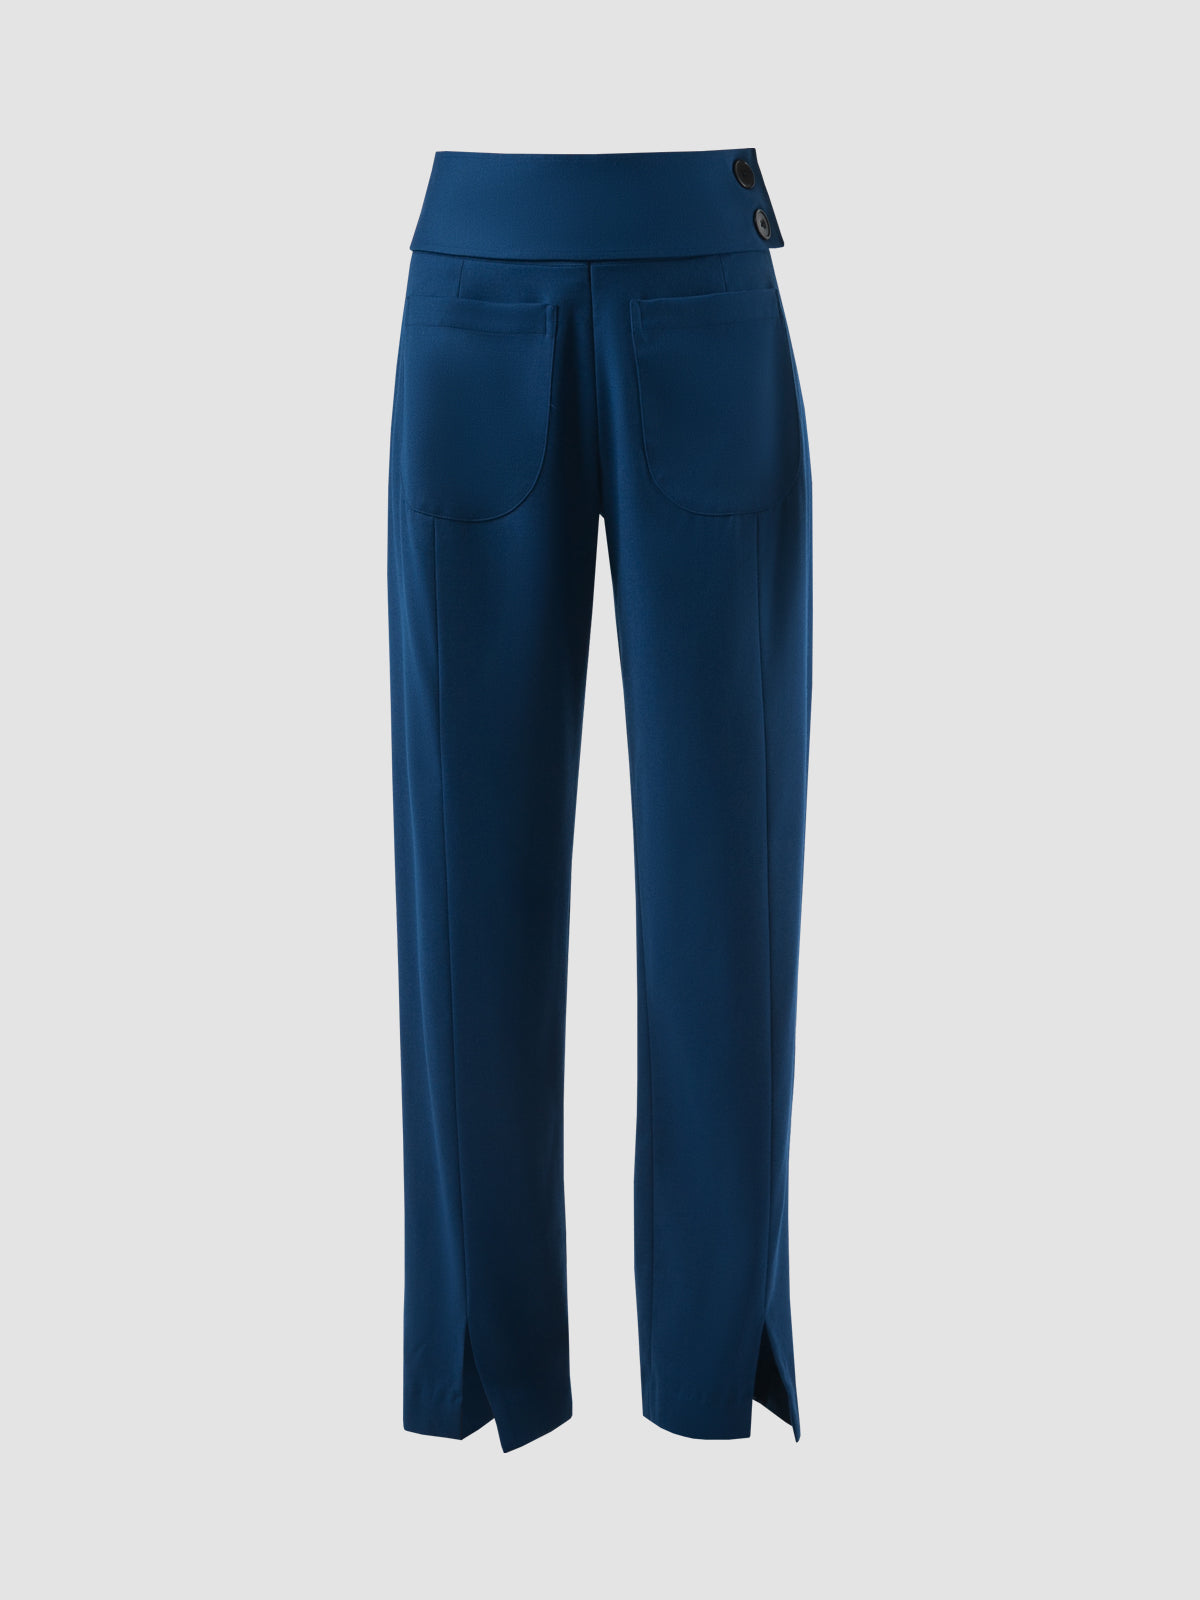 Petal blue straight pants